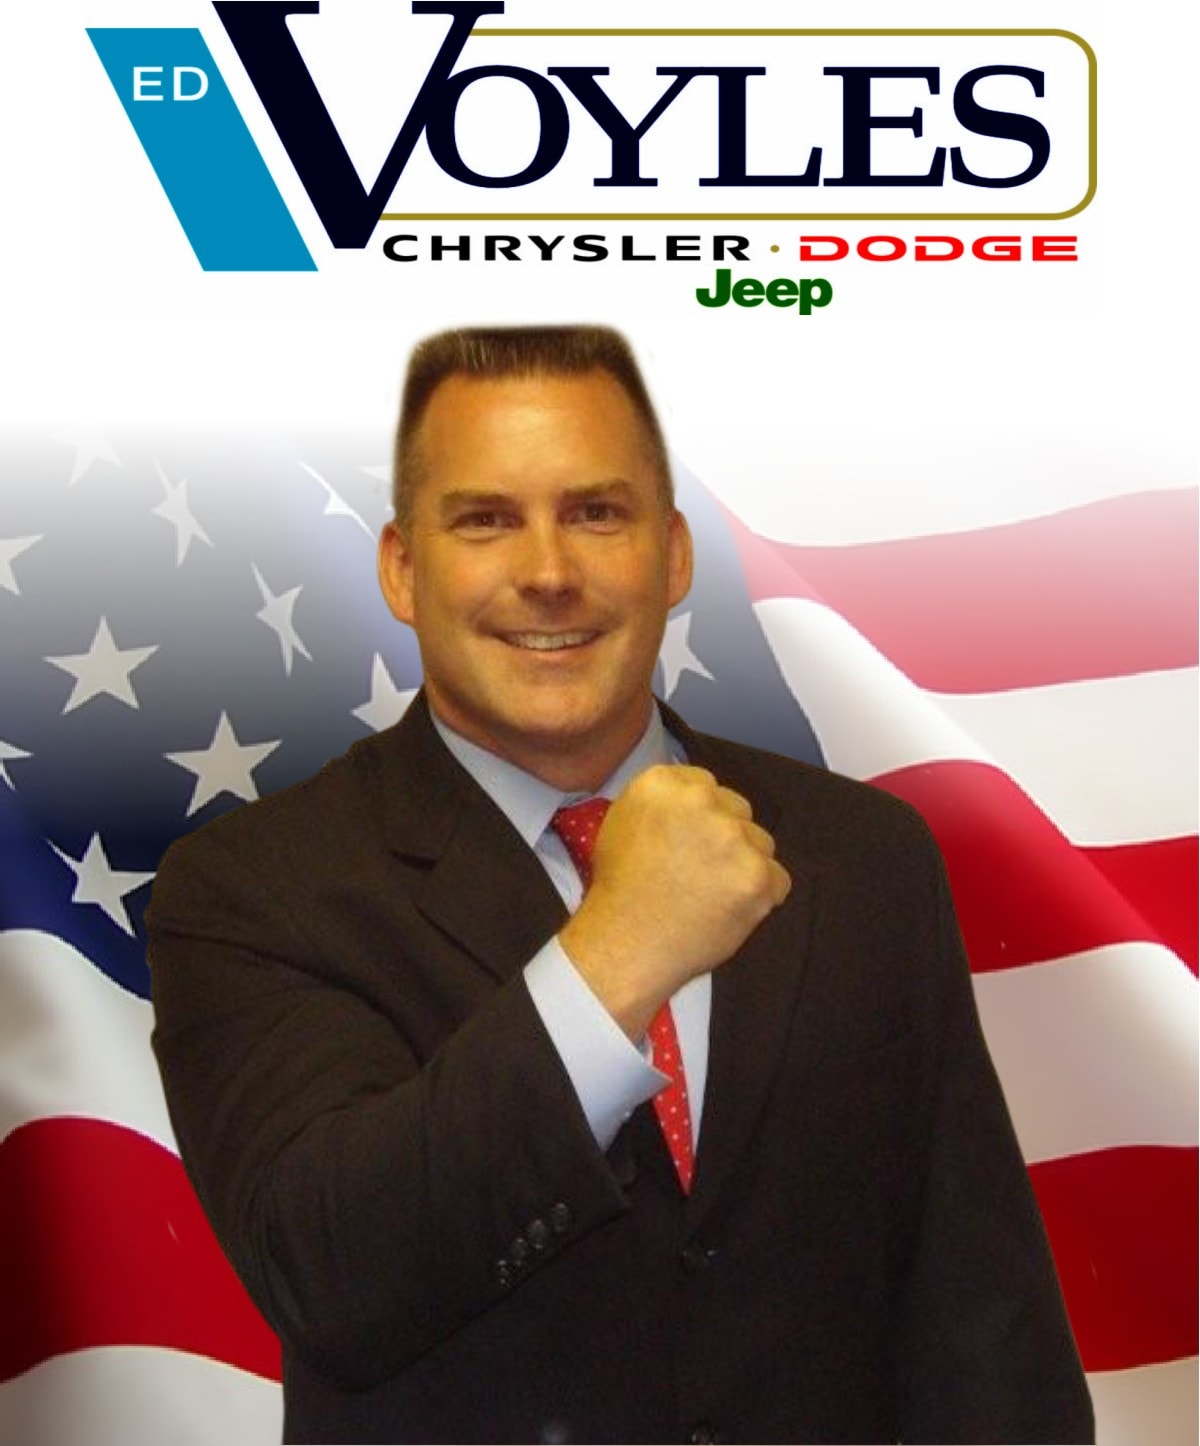 Ed Voyles Chrysler Dodge Jeep Ram Inc